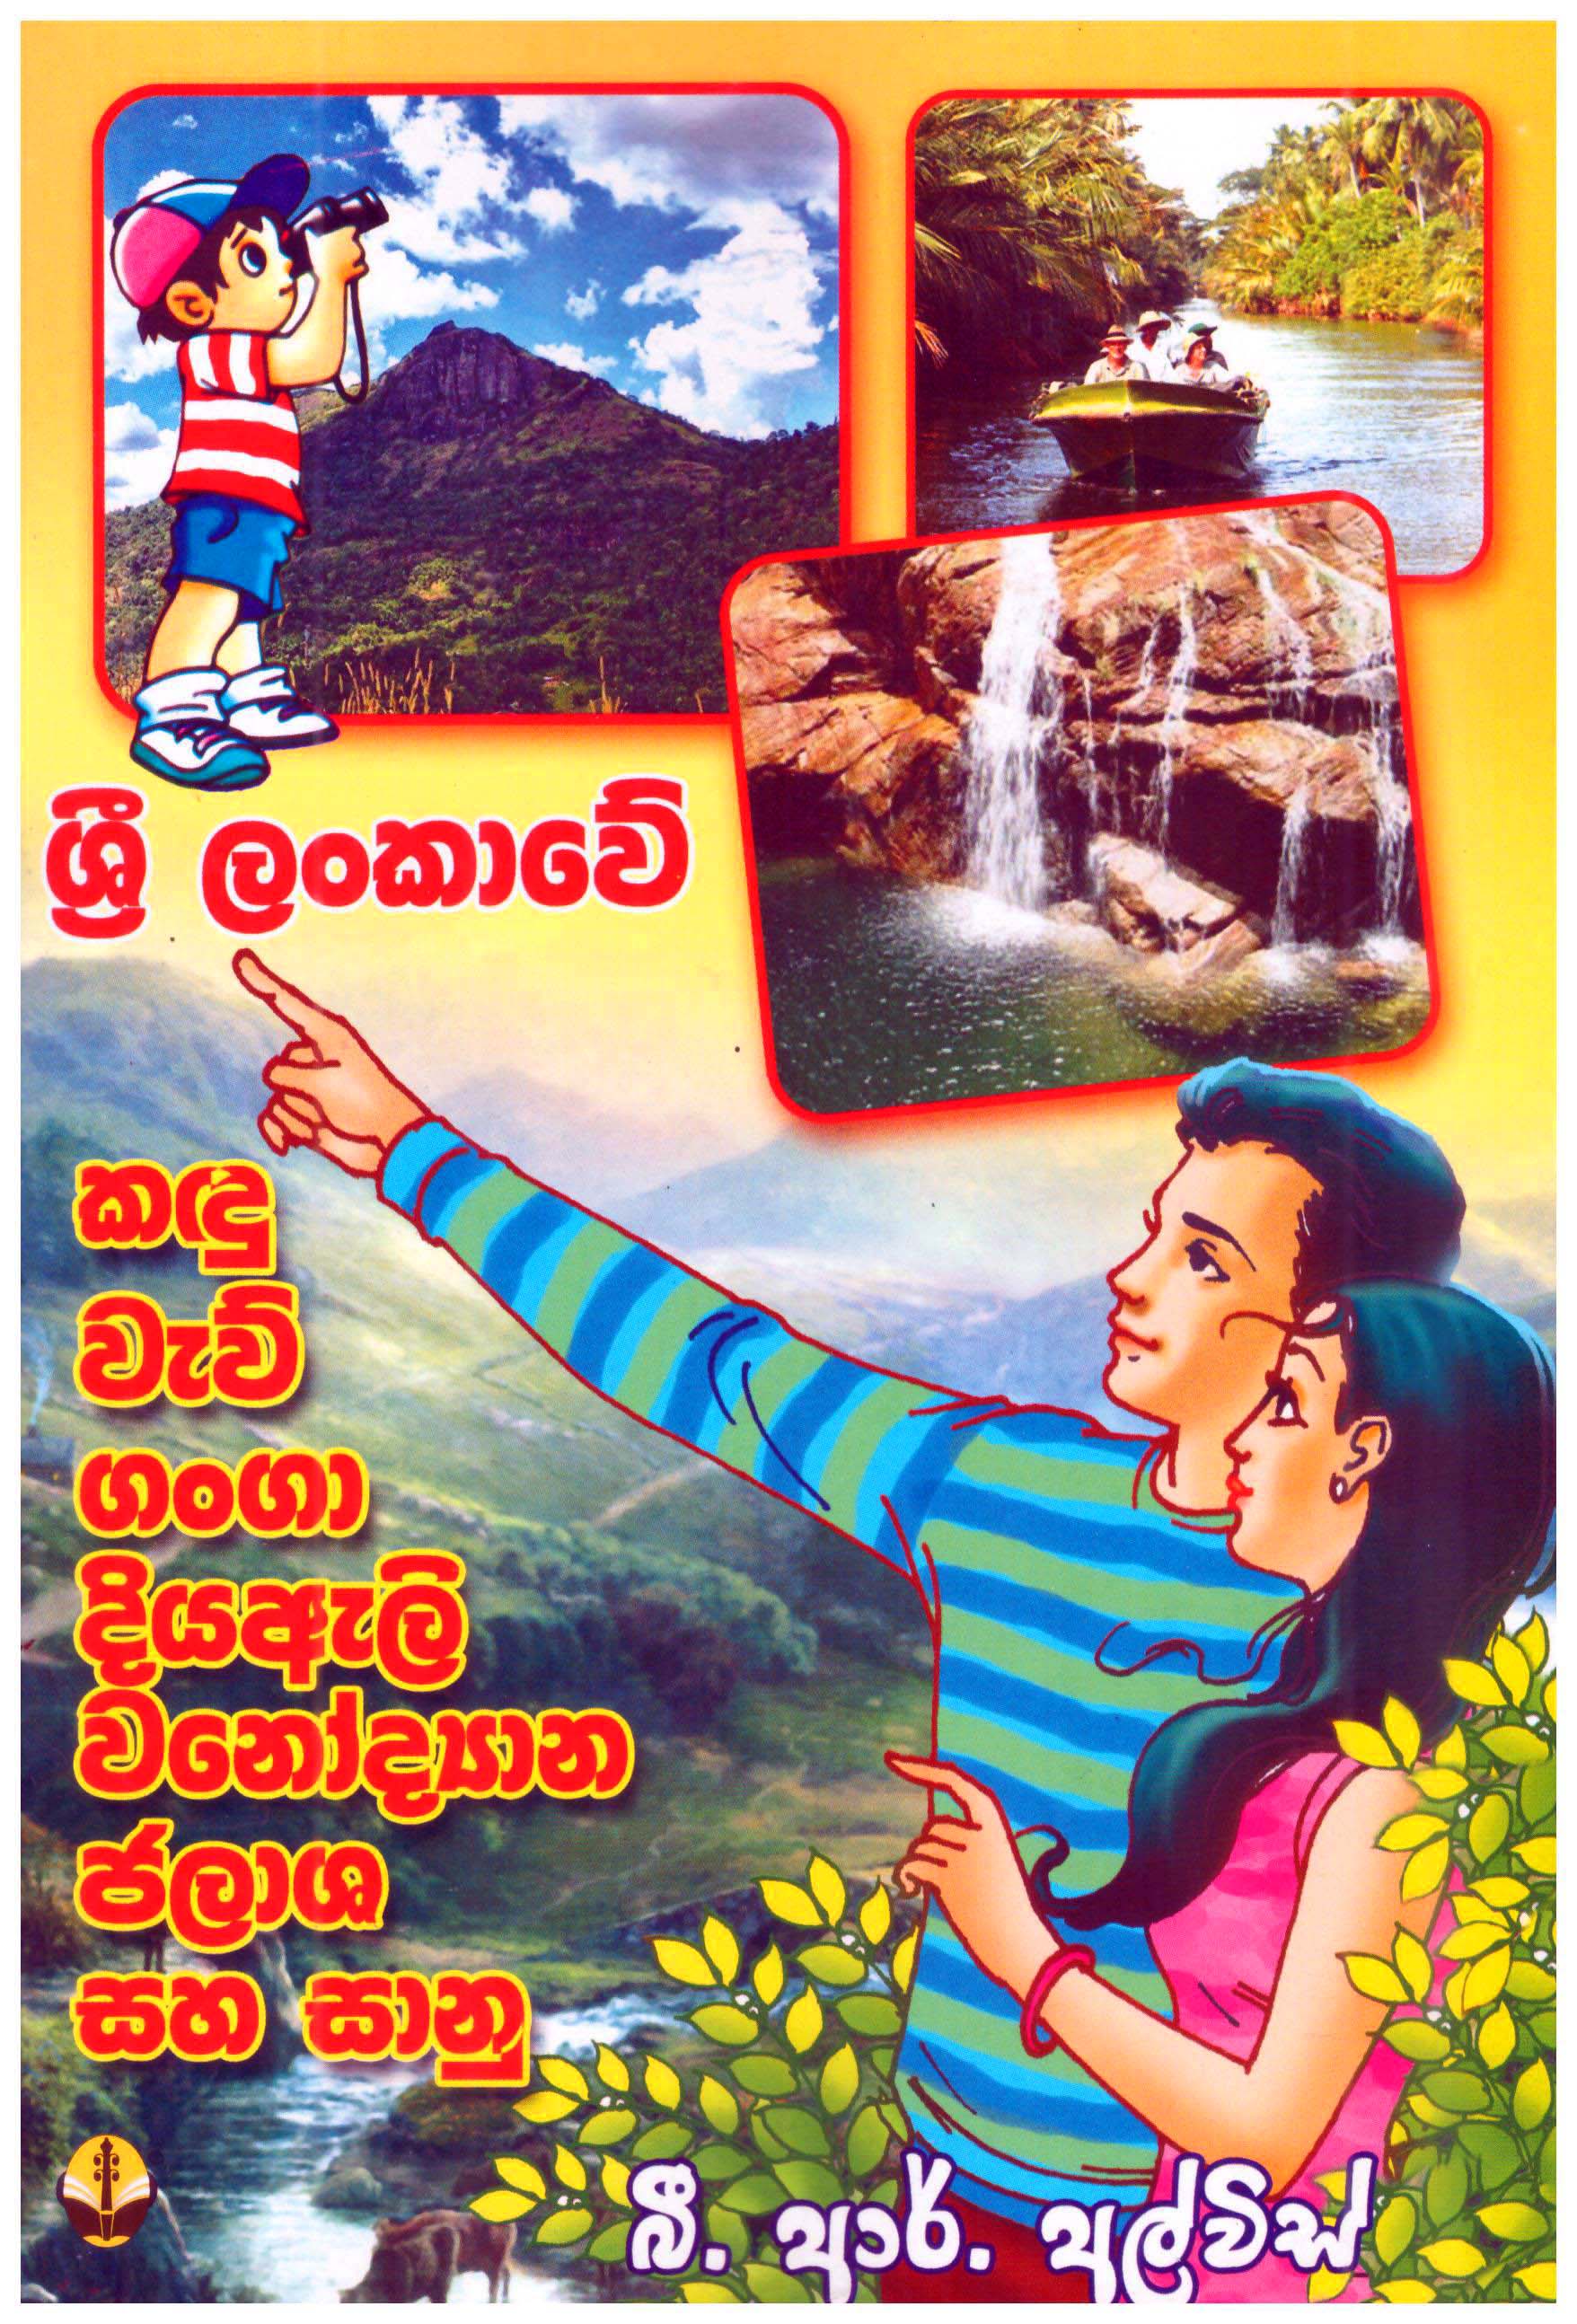 Sri Lankawe Kandu Wewu Ganga Diyaeli Wanaudyana Jalasha Saha Saanu